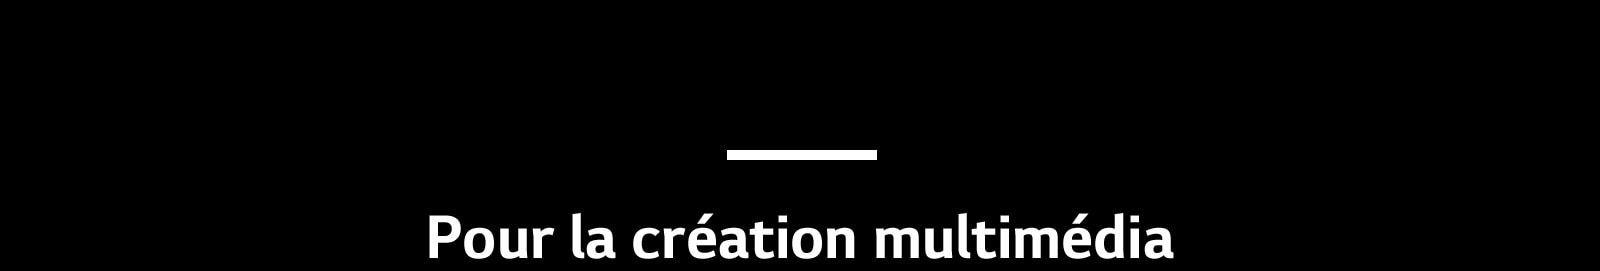 MNT-43UN700-11-MediaCreation-Intro-D